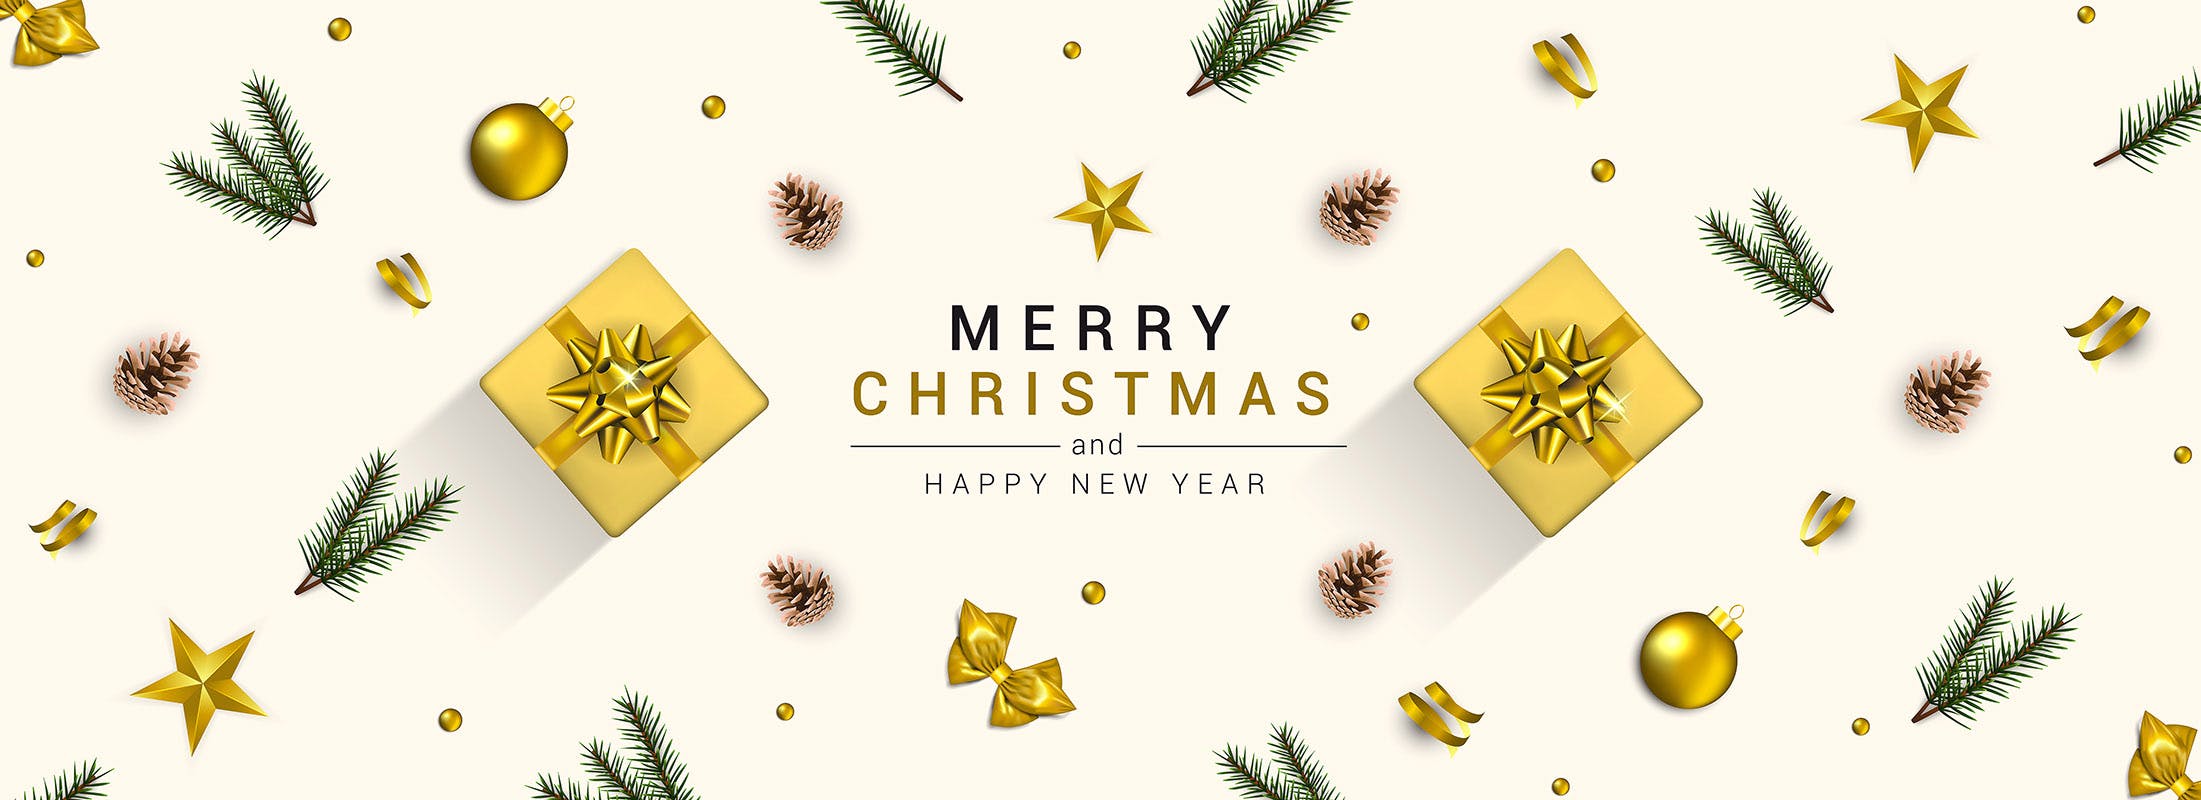 圣诞节/新年祝福主题贺卡设计模板v1 Merry Christmas and Happy New Year greeting cards插图(6)